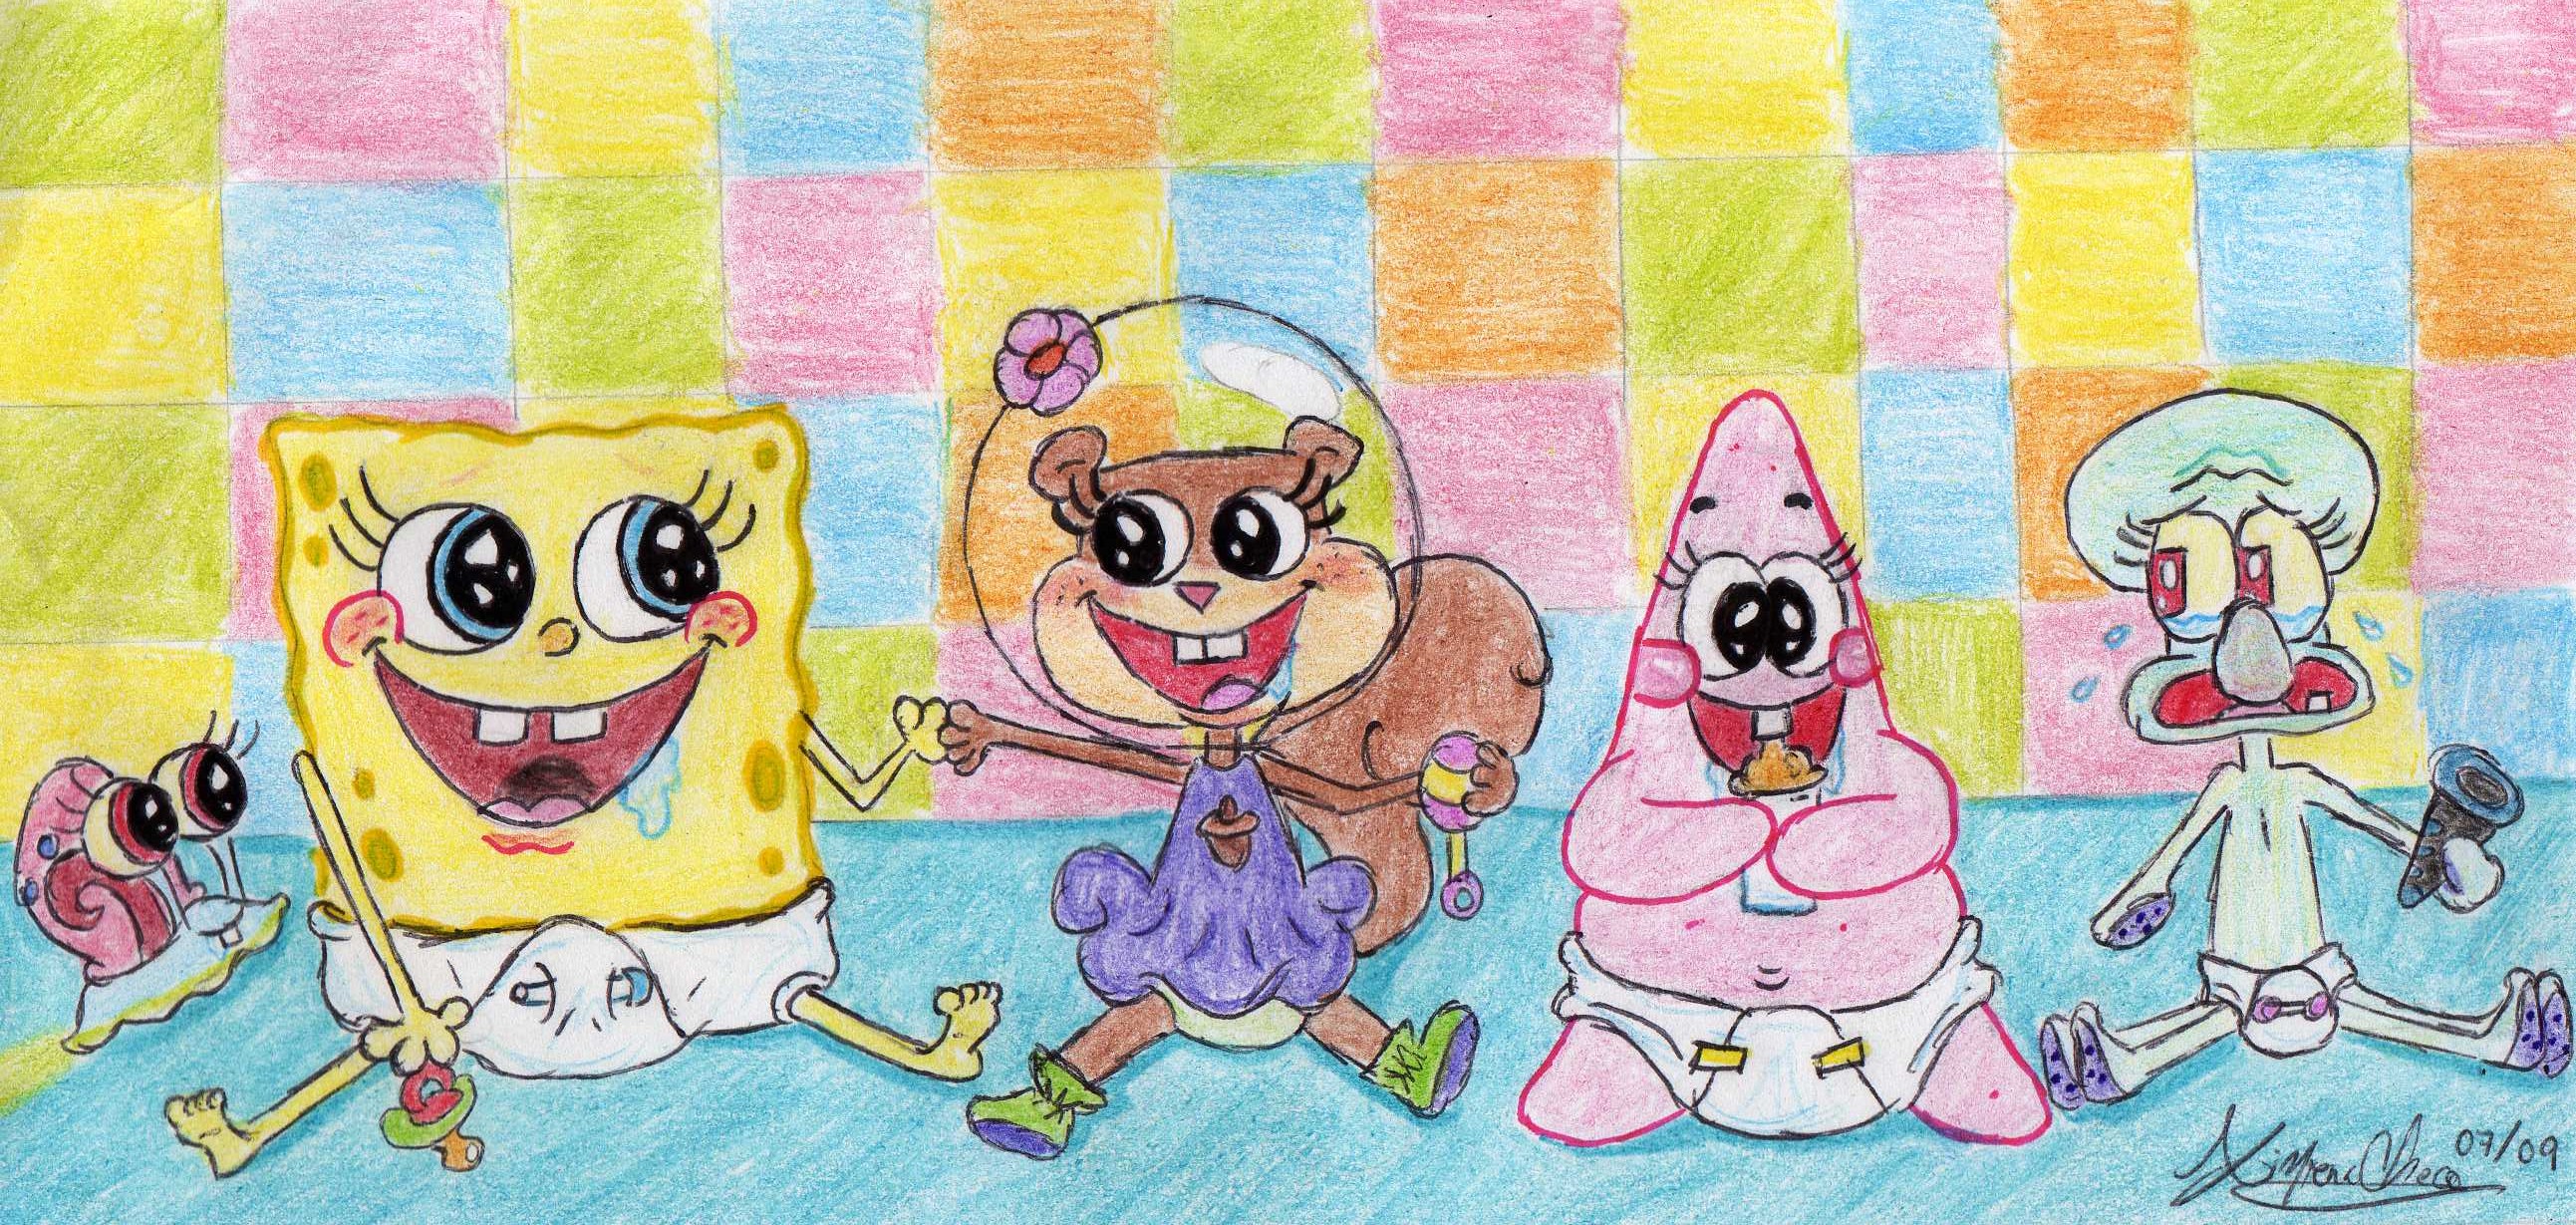 spongebob and patrick as babies